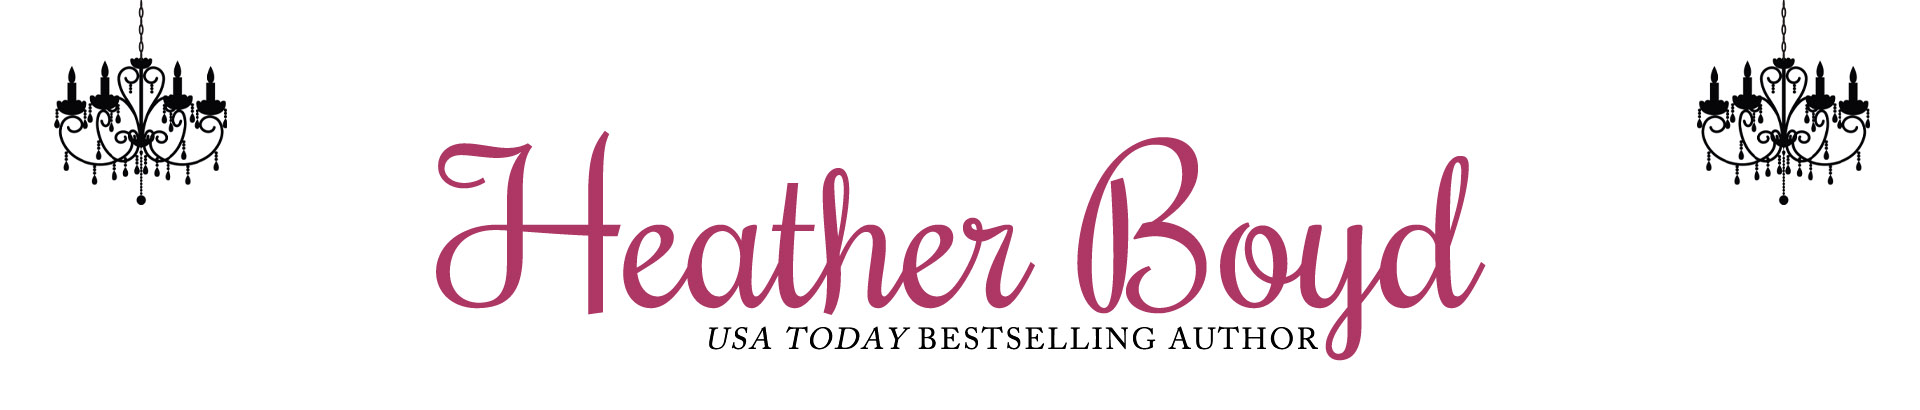 Heather Boyd | USAT Bestselling Author